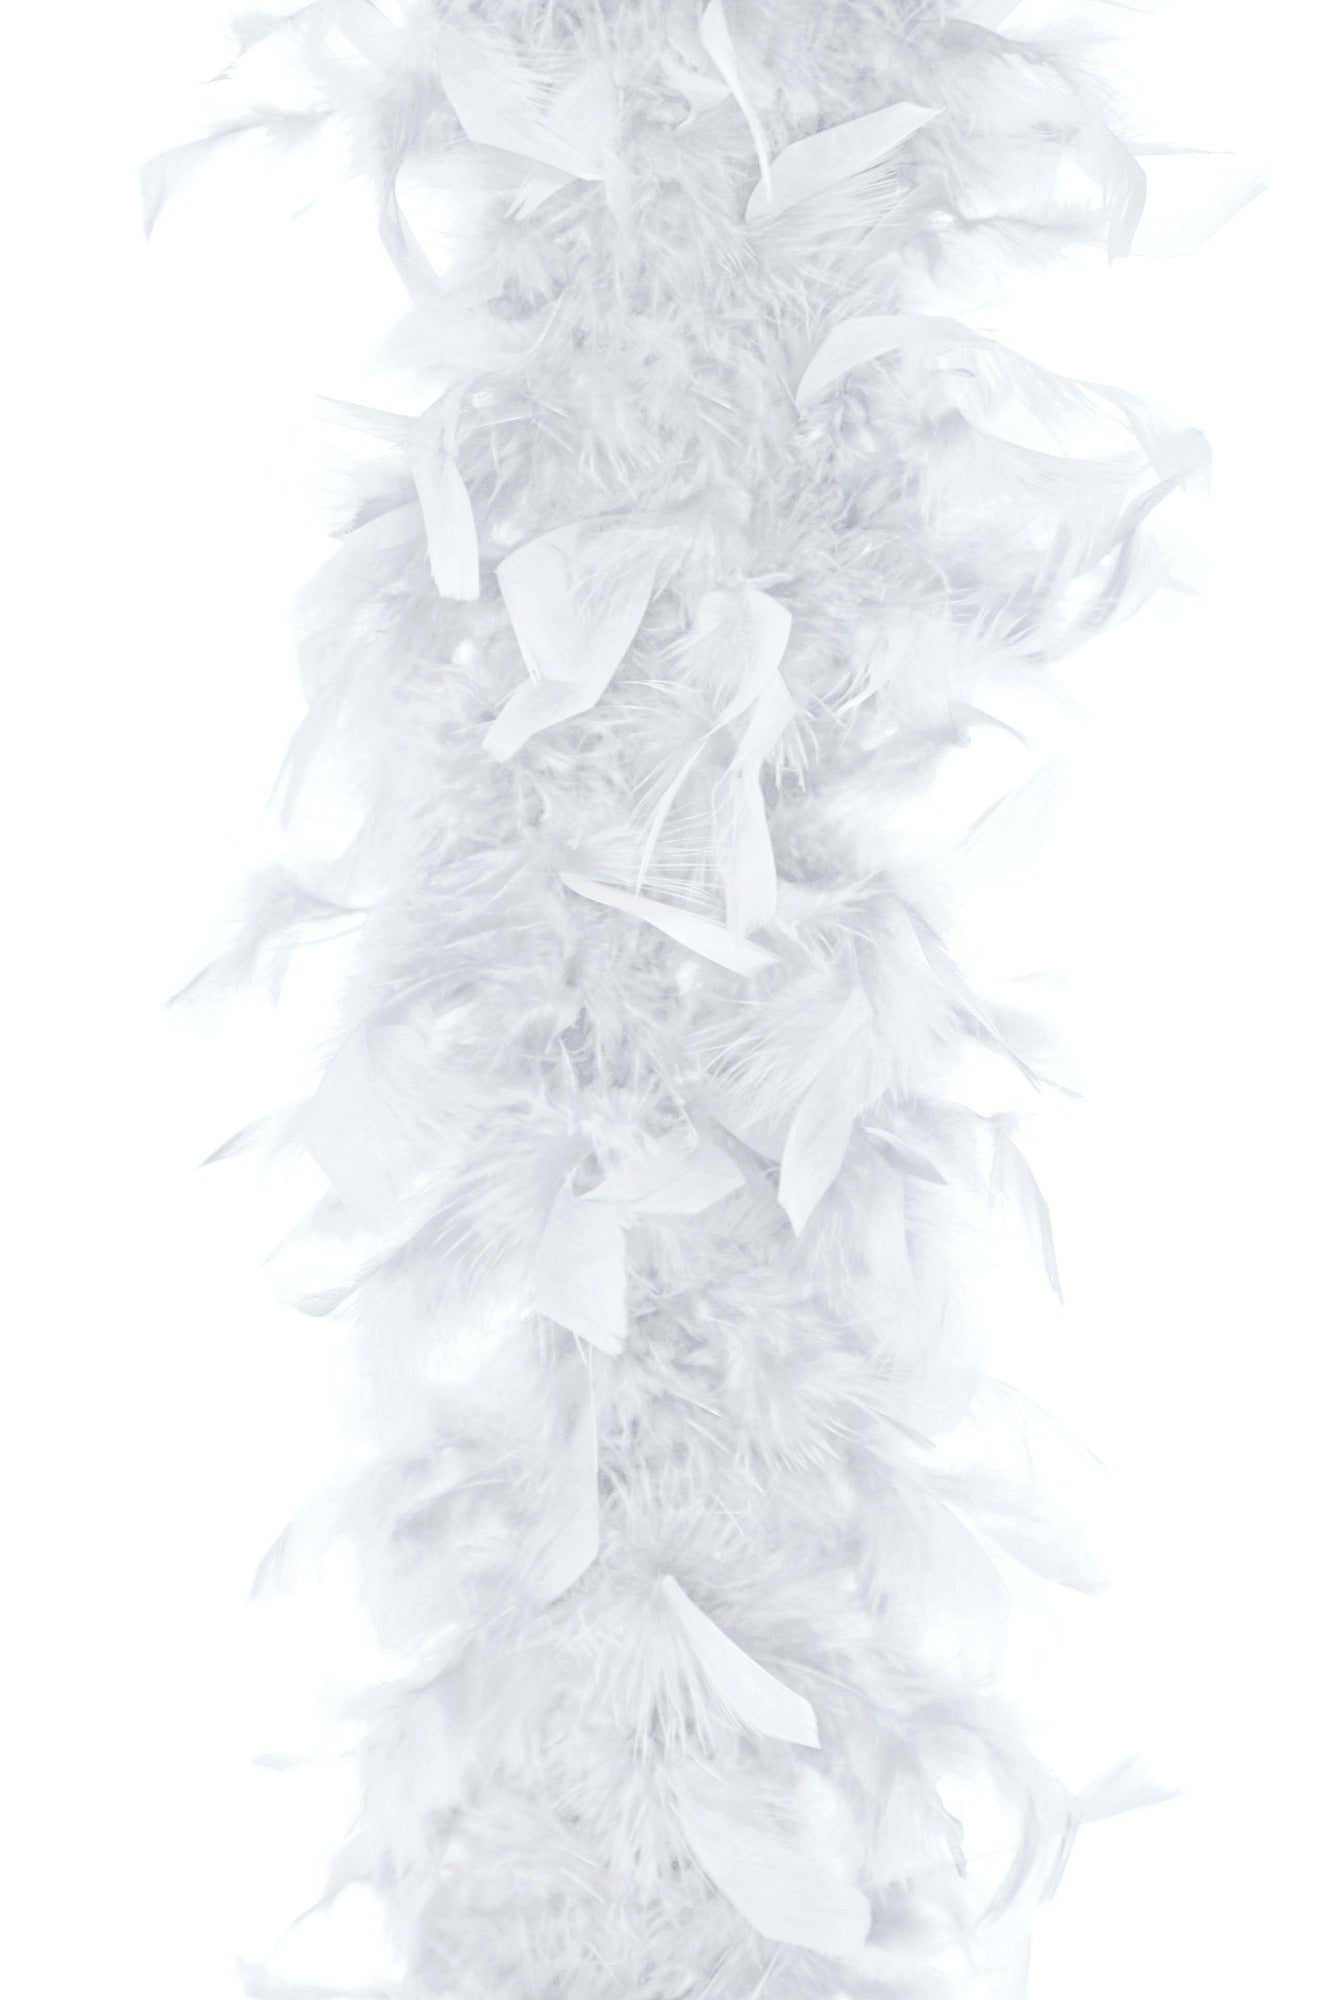 Feather Boa White 180cm